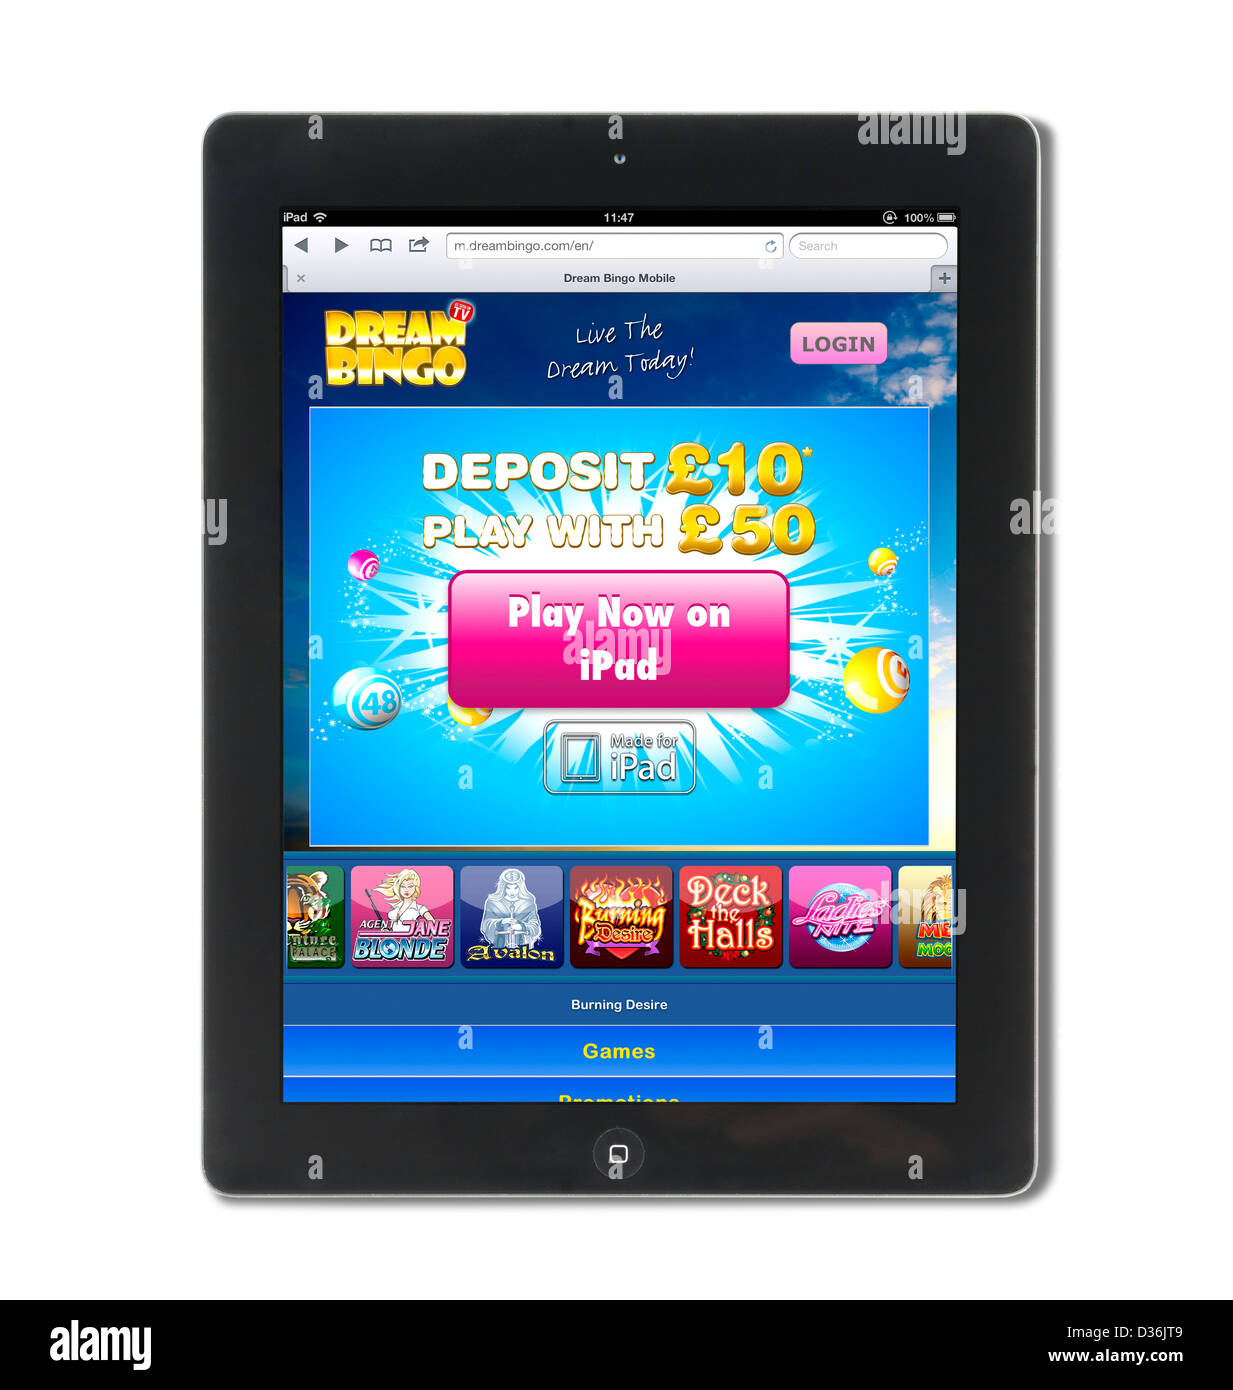 Dream Bingo on a 4th generation Apple iPad, UK Stock Photo